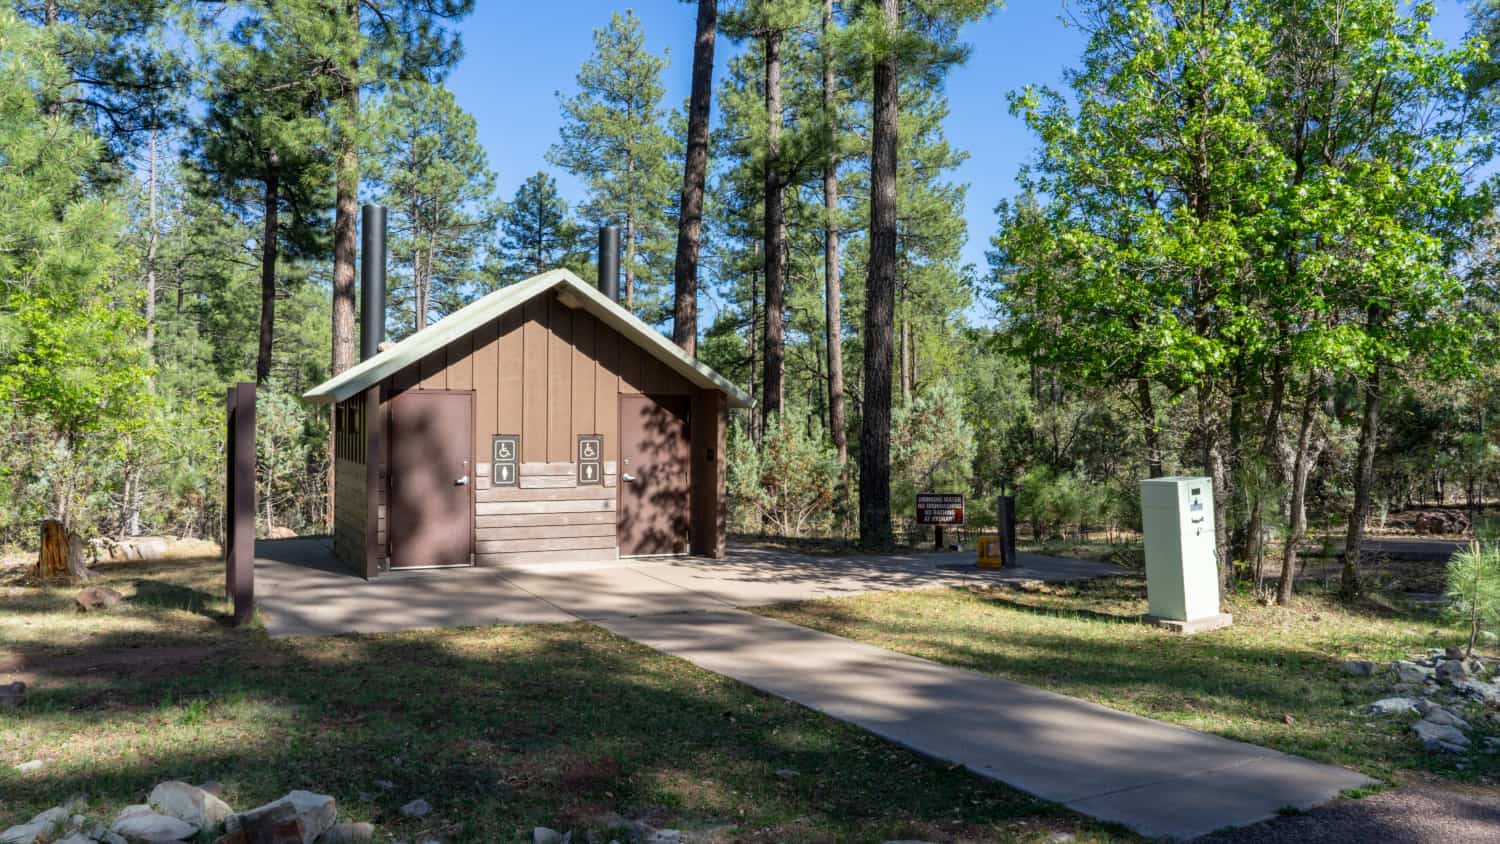 Sharp Creek Campground Review - Tonto National Forest, Arizona | GoPetFriendly.com